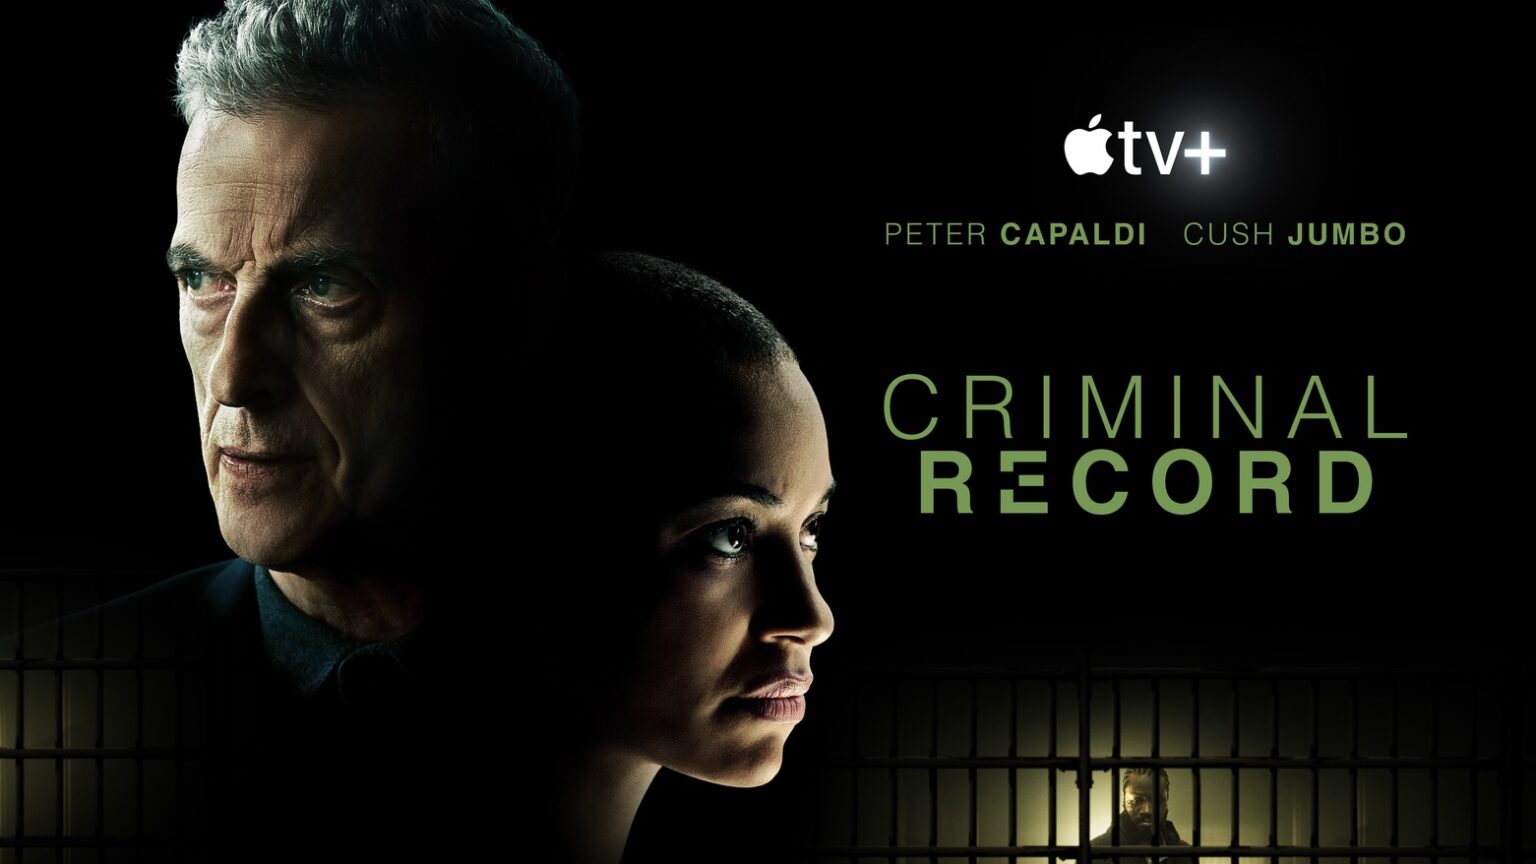 Peter Capaldi and Cush Jumbo star in 'Criminal Record' on Apple TV+.